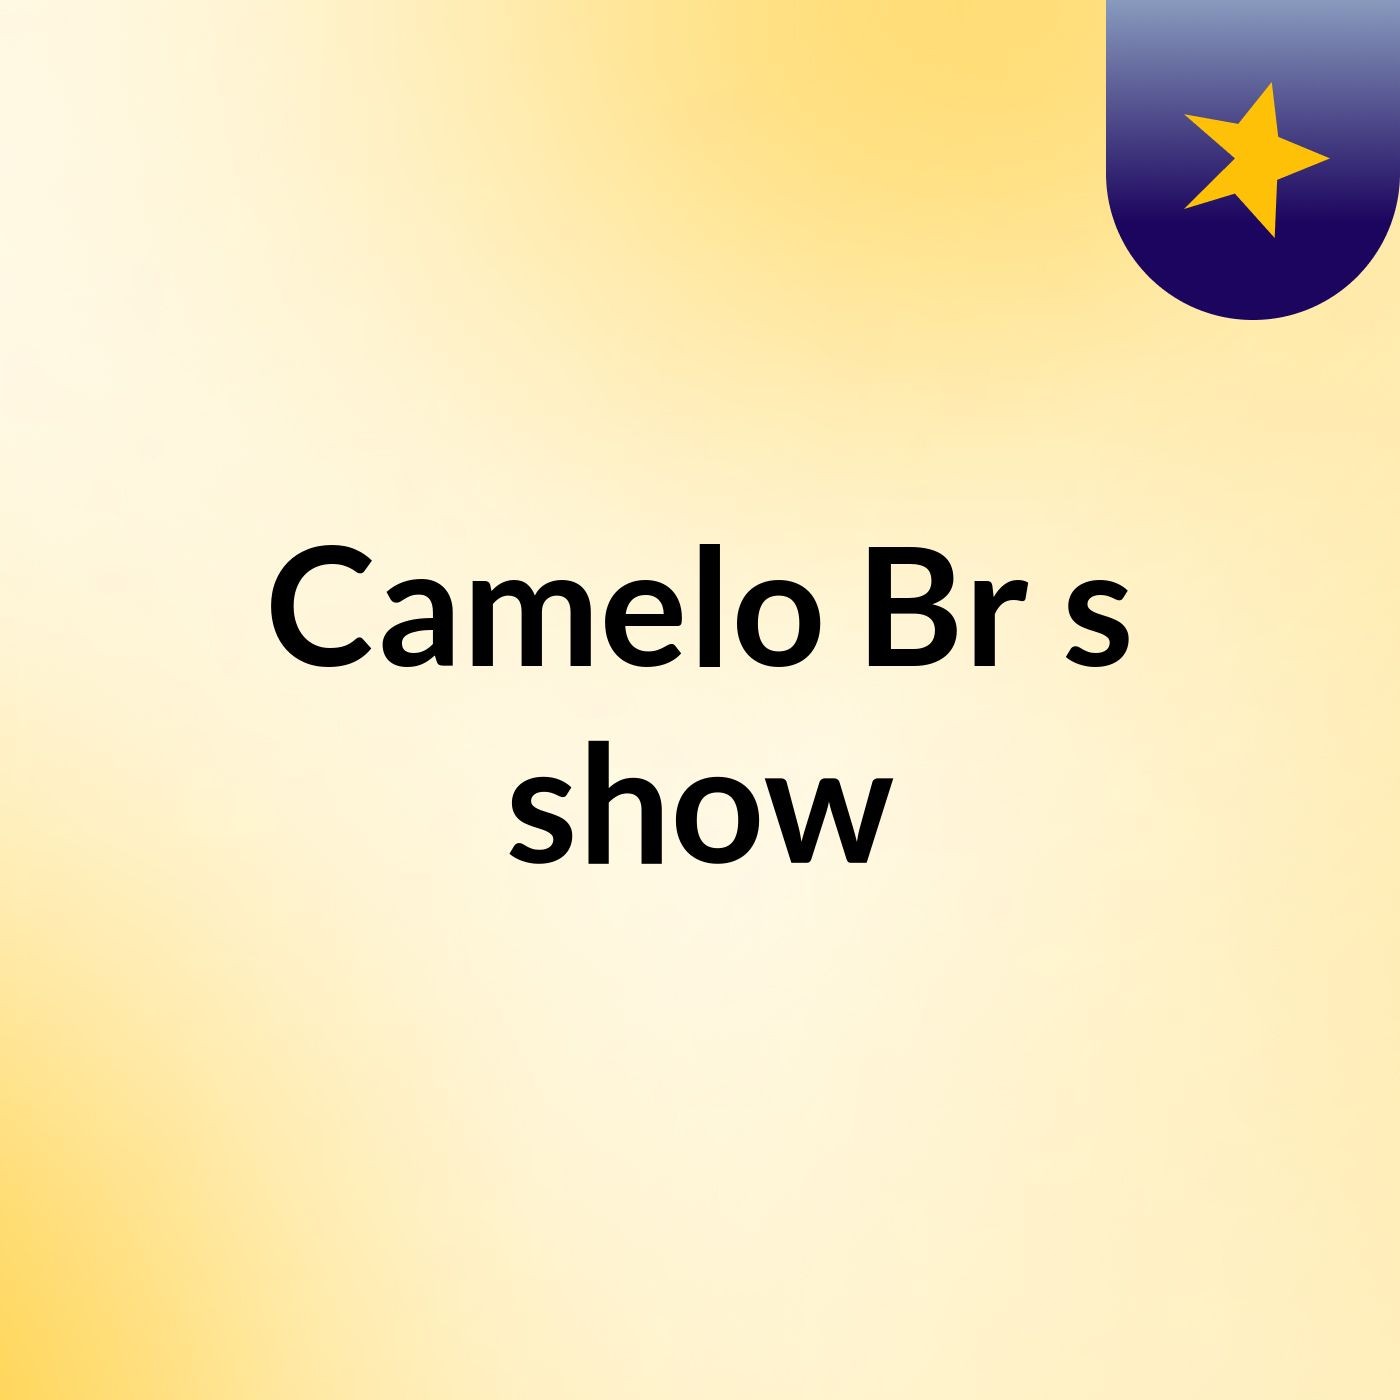 Camelo Br's show